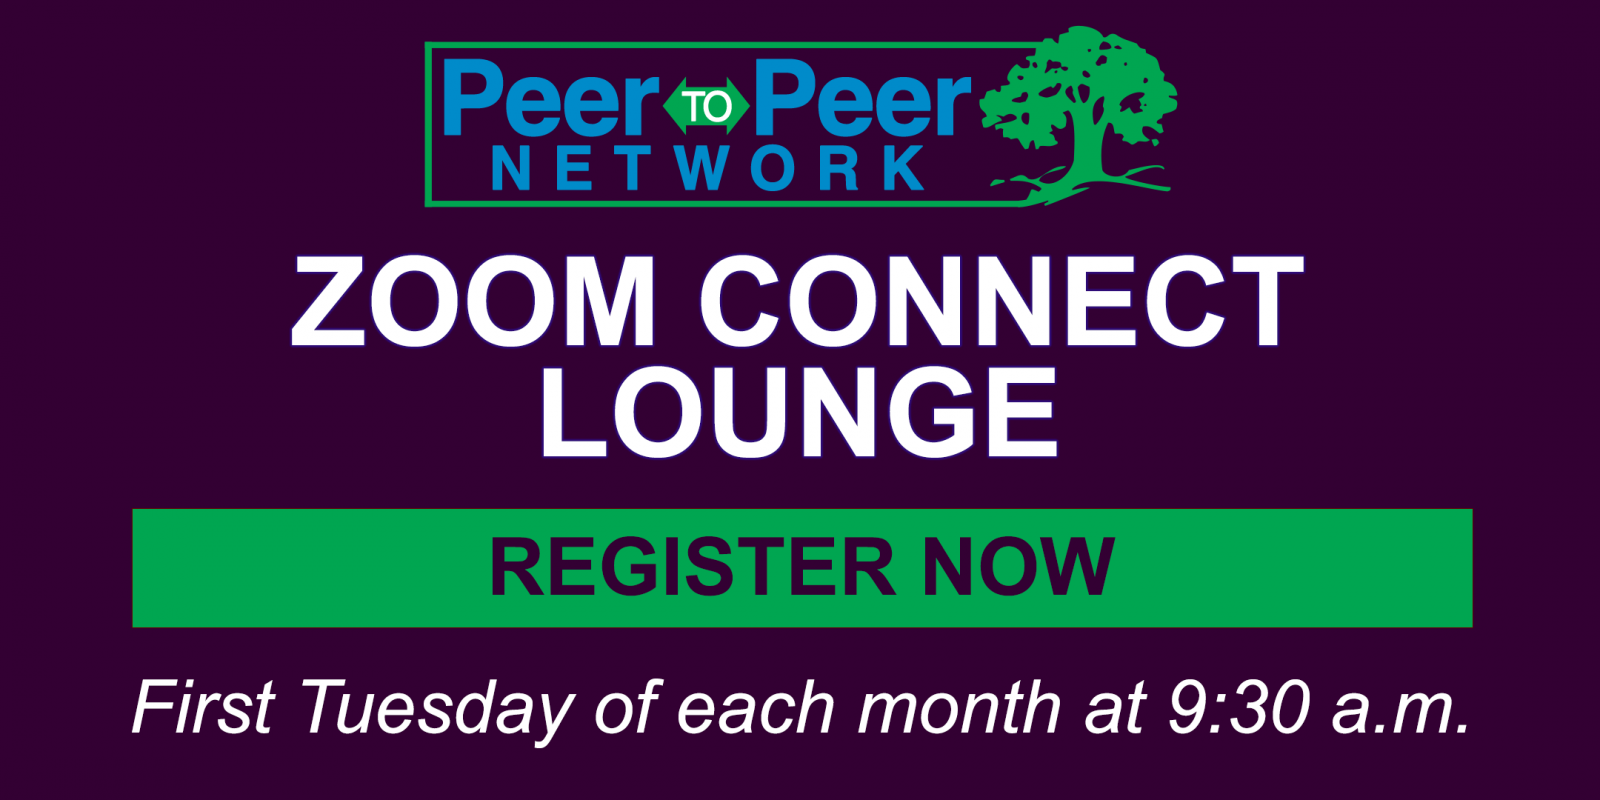 LO Peer to Peer Network Zoom Connect Lounge